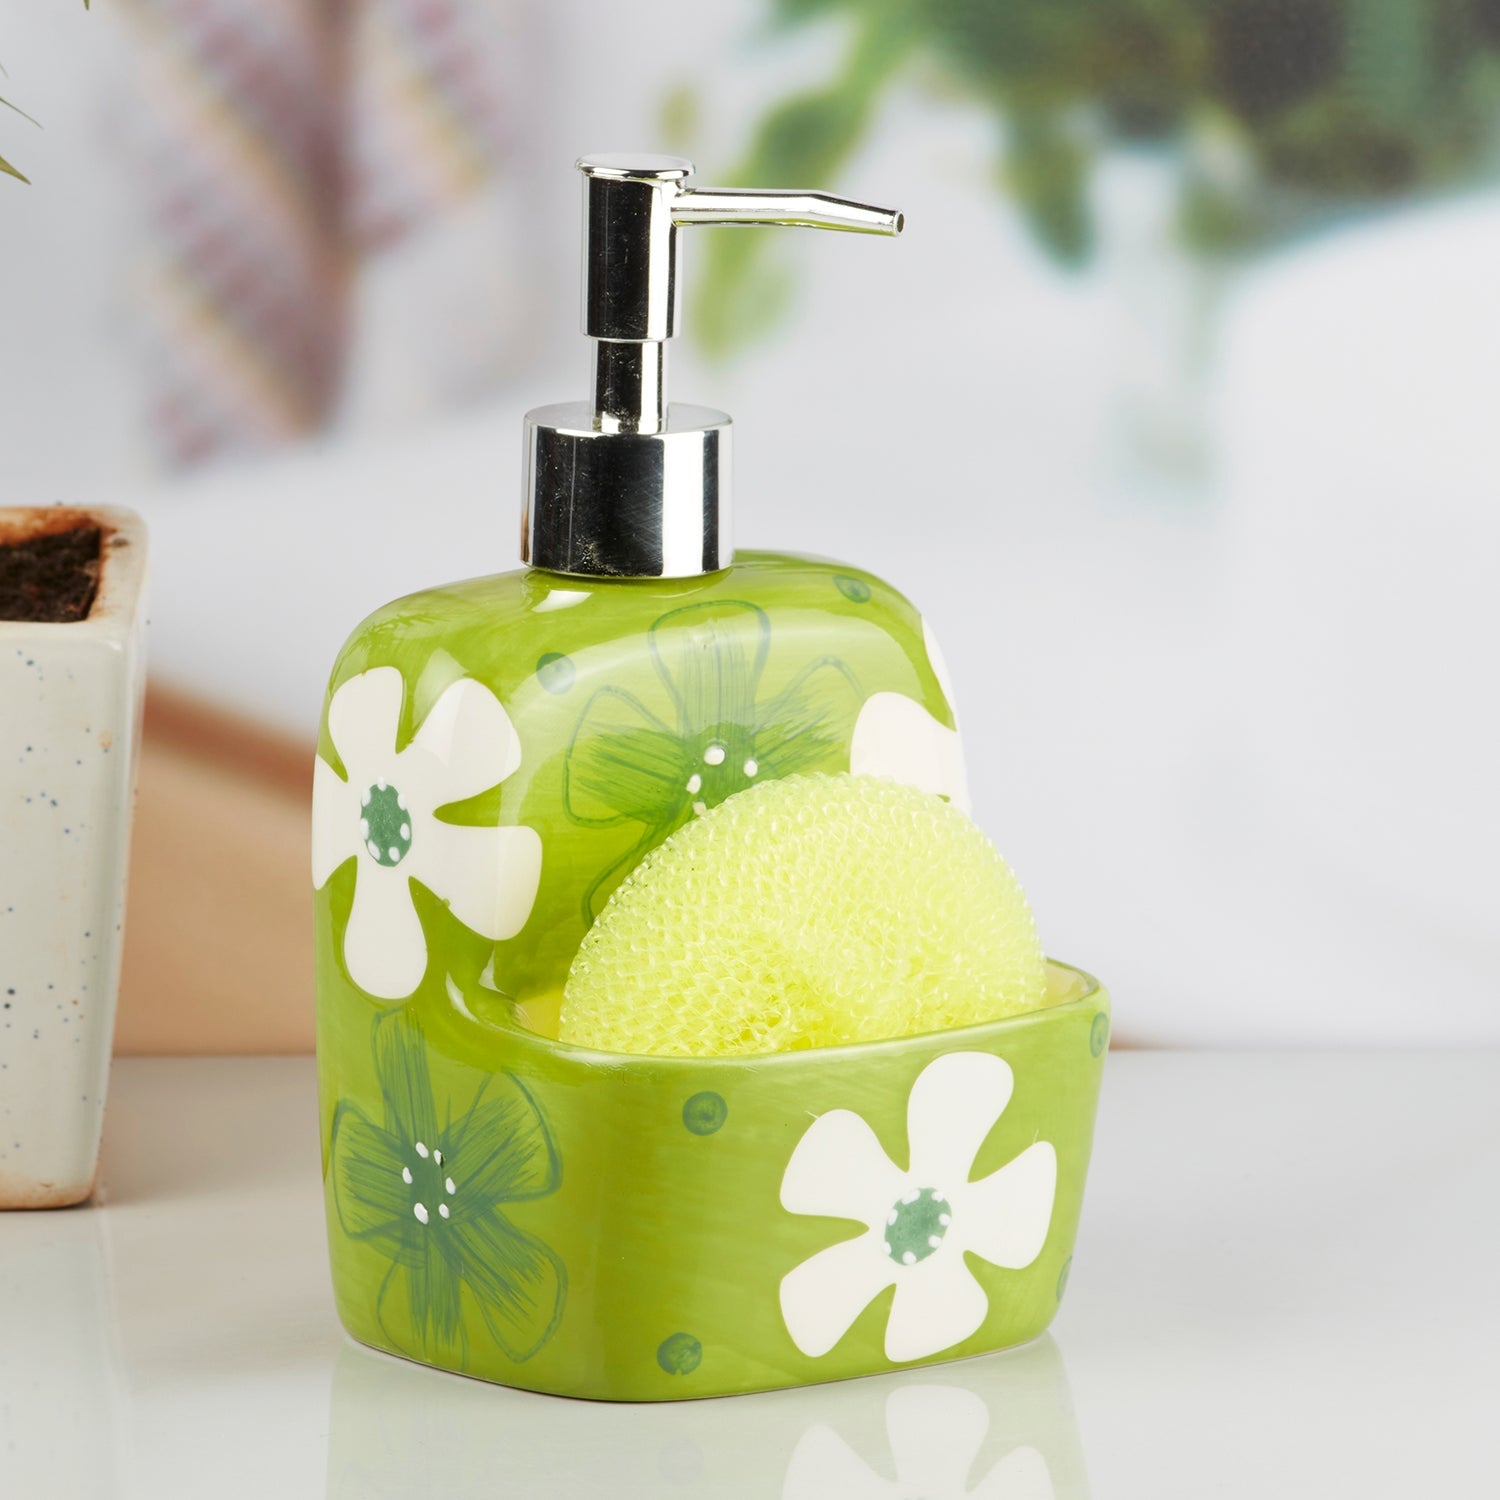 Ceramic Soap Dispenser handwash Pump for Bathroom, Set of 1, Green (8046)